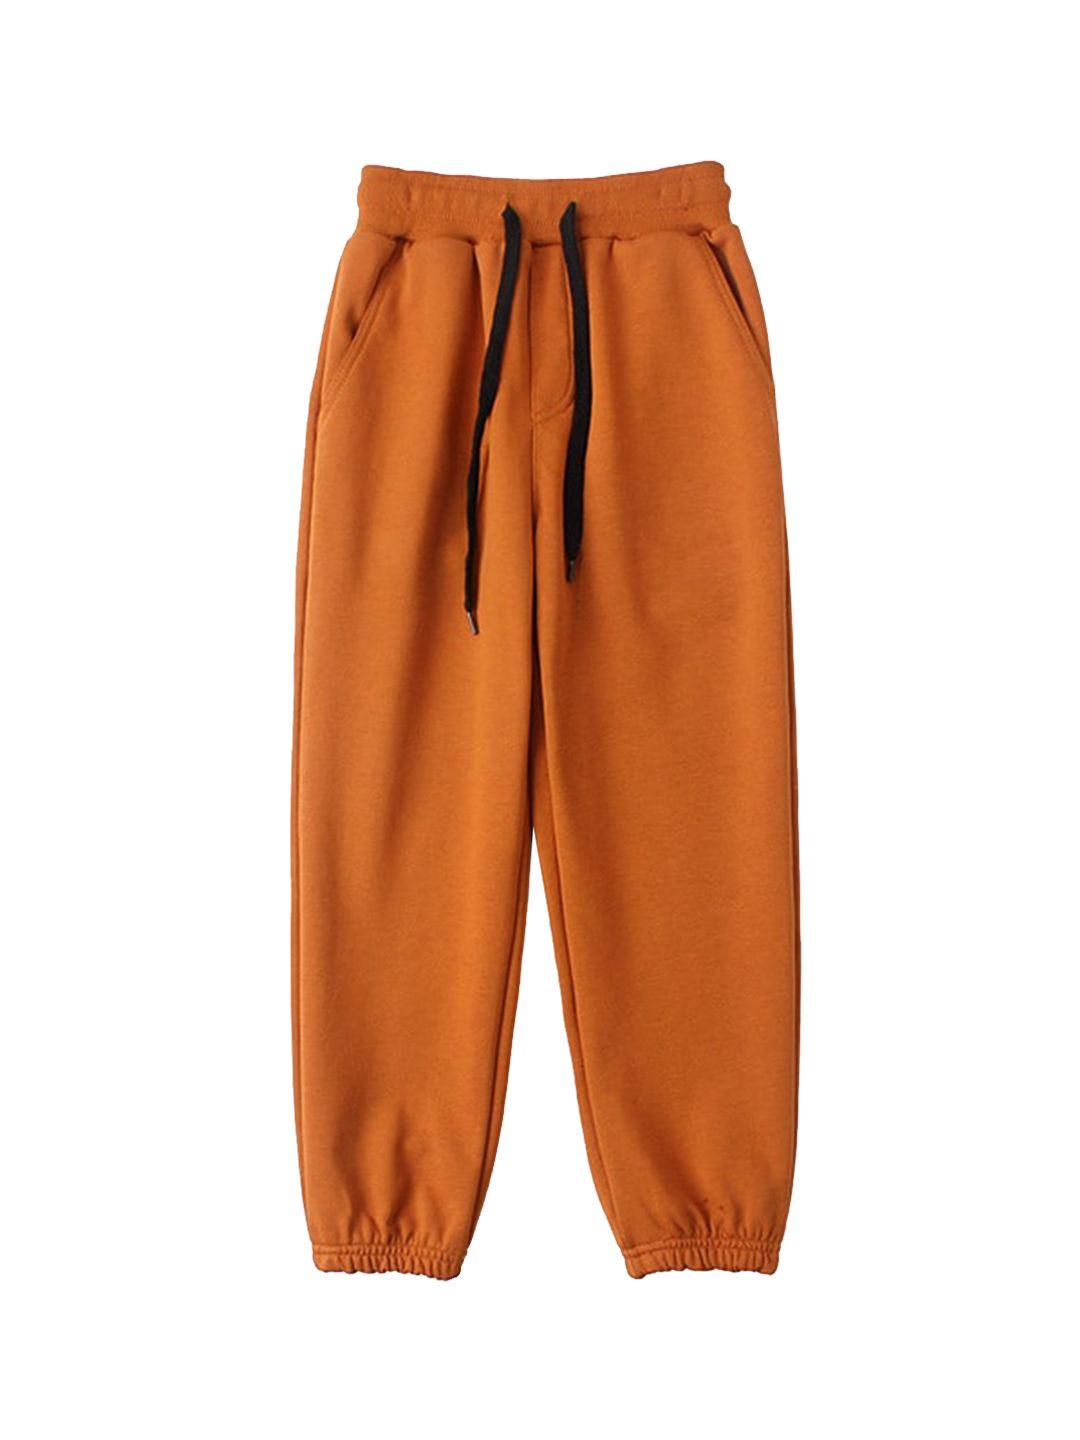 stylecast-boys-orange-high-rise-easy-wash-trousers